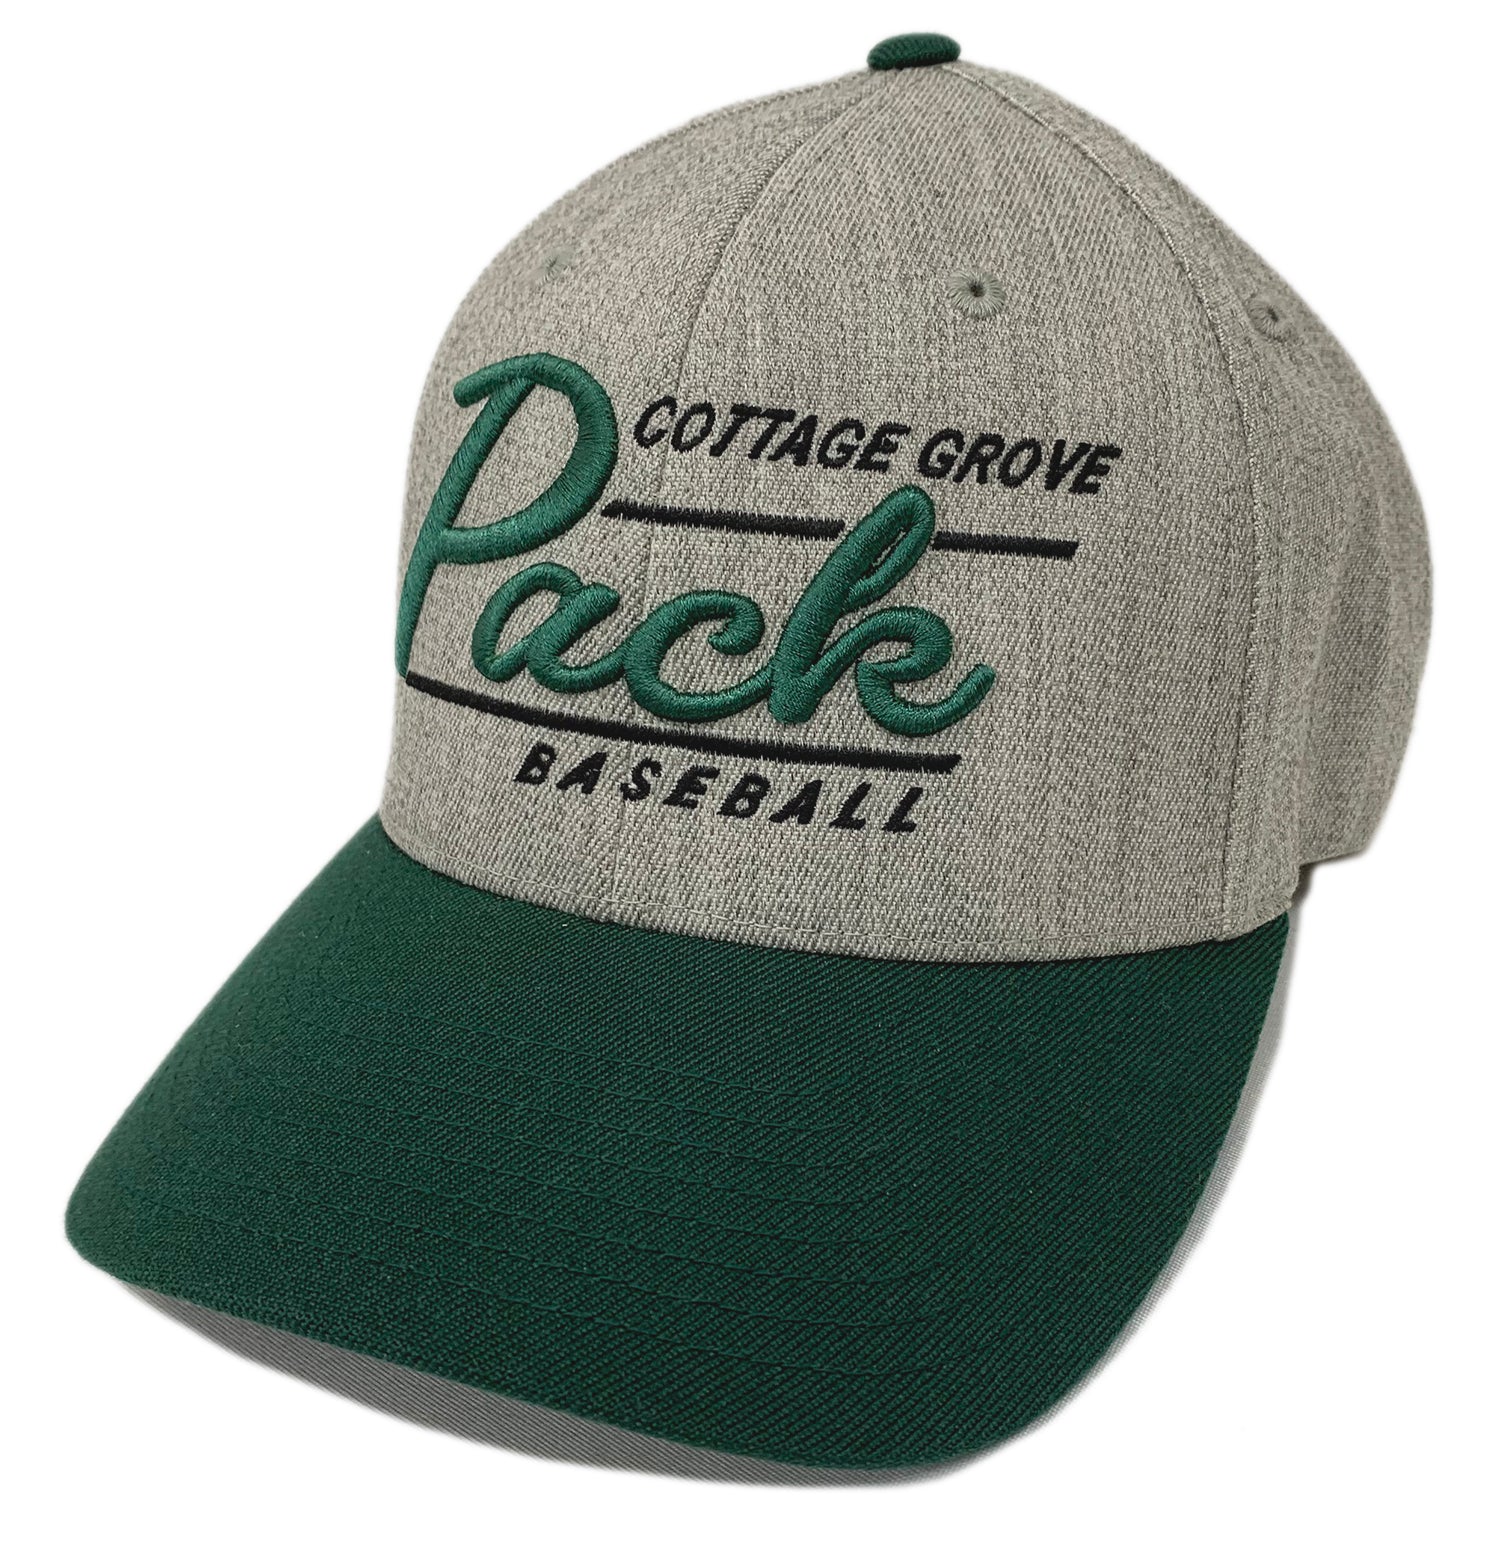 Cottage Grove Pack 585CO Wool Blend R-Flex Hat-Hats-Advanced Sportswear